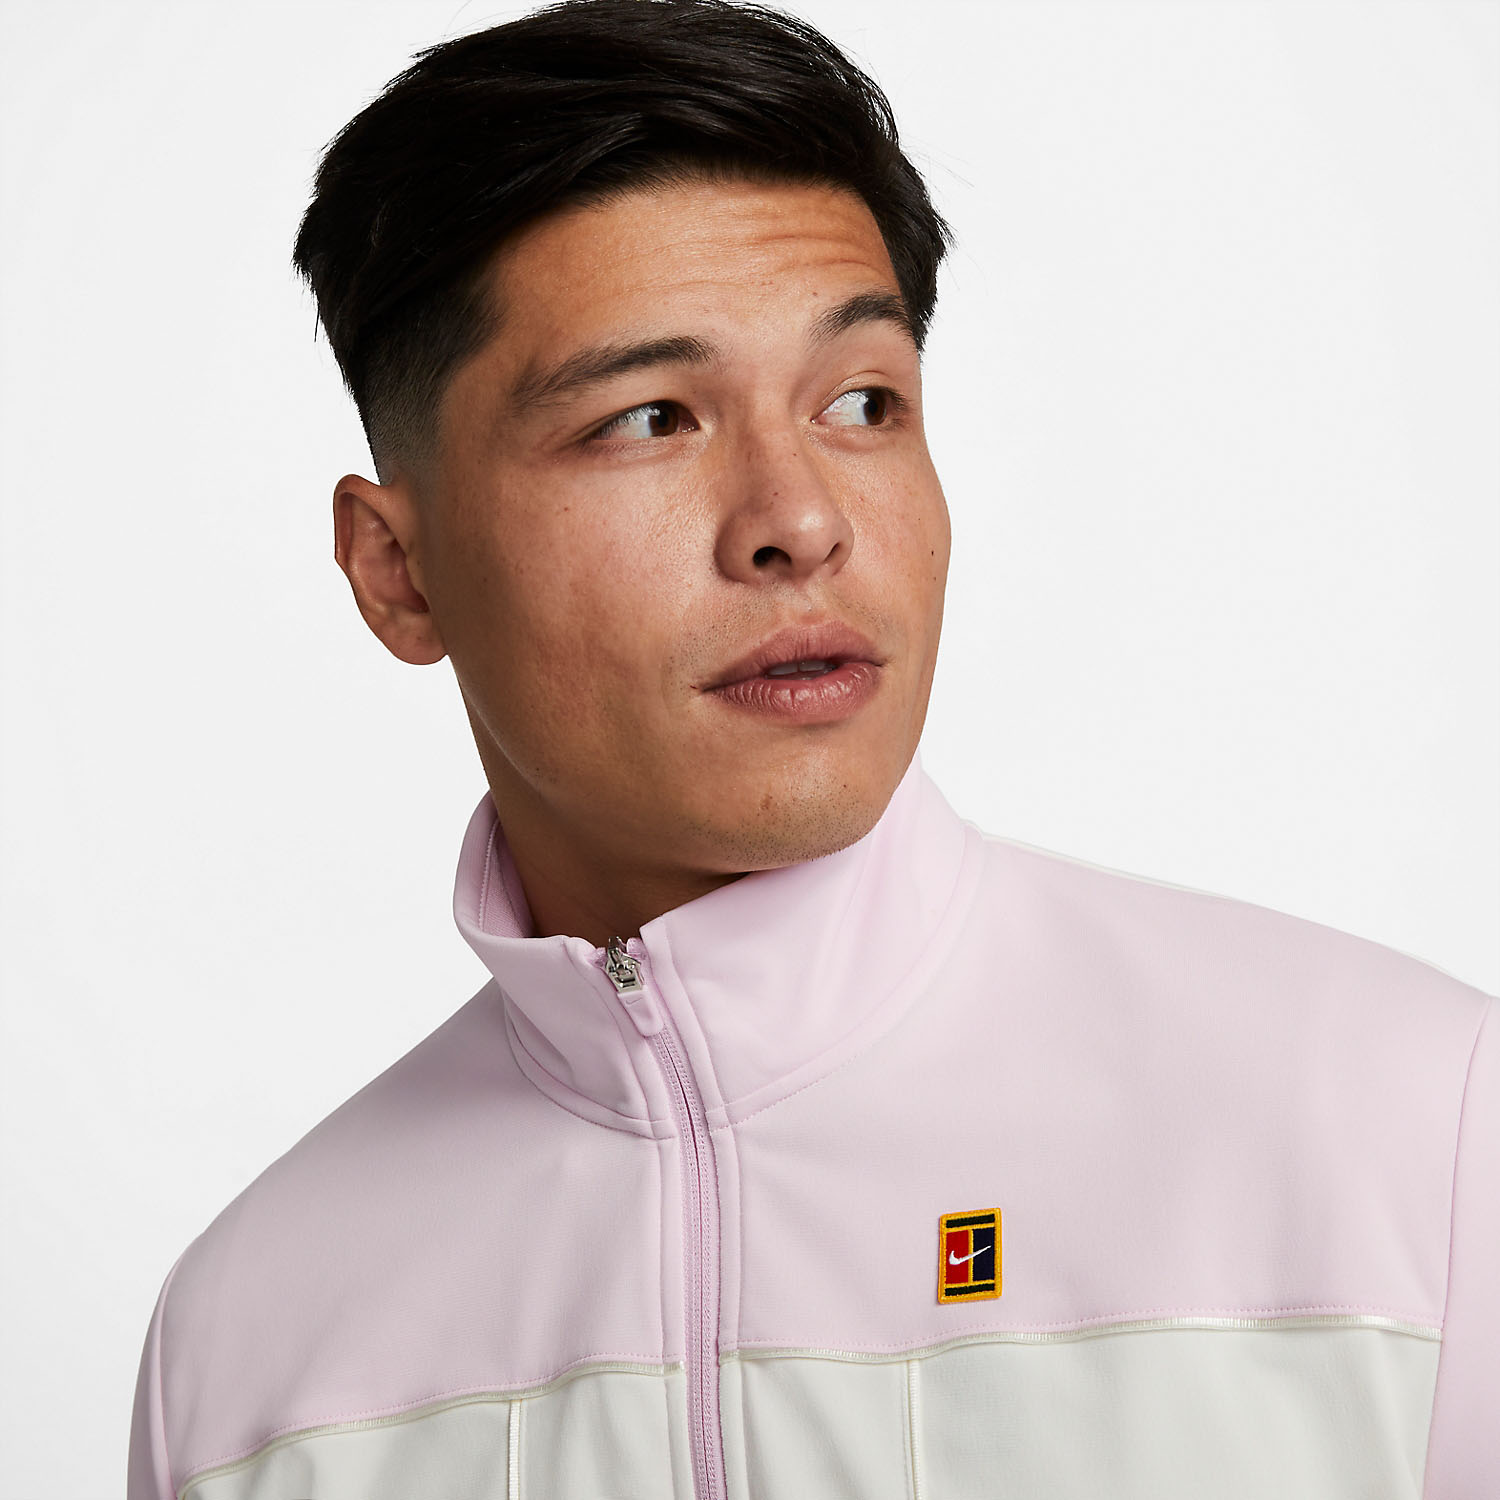 Nike Heritage Jacket - Pink Foam/Sail